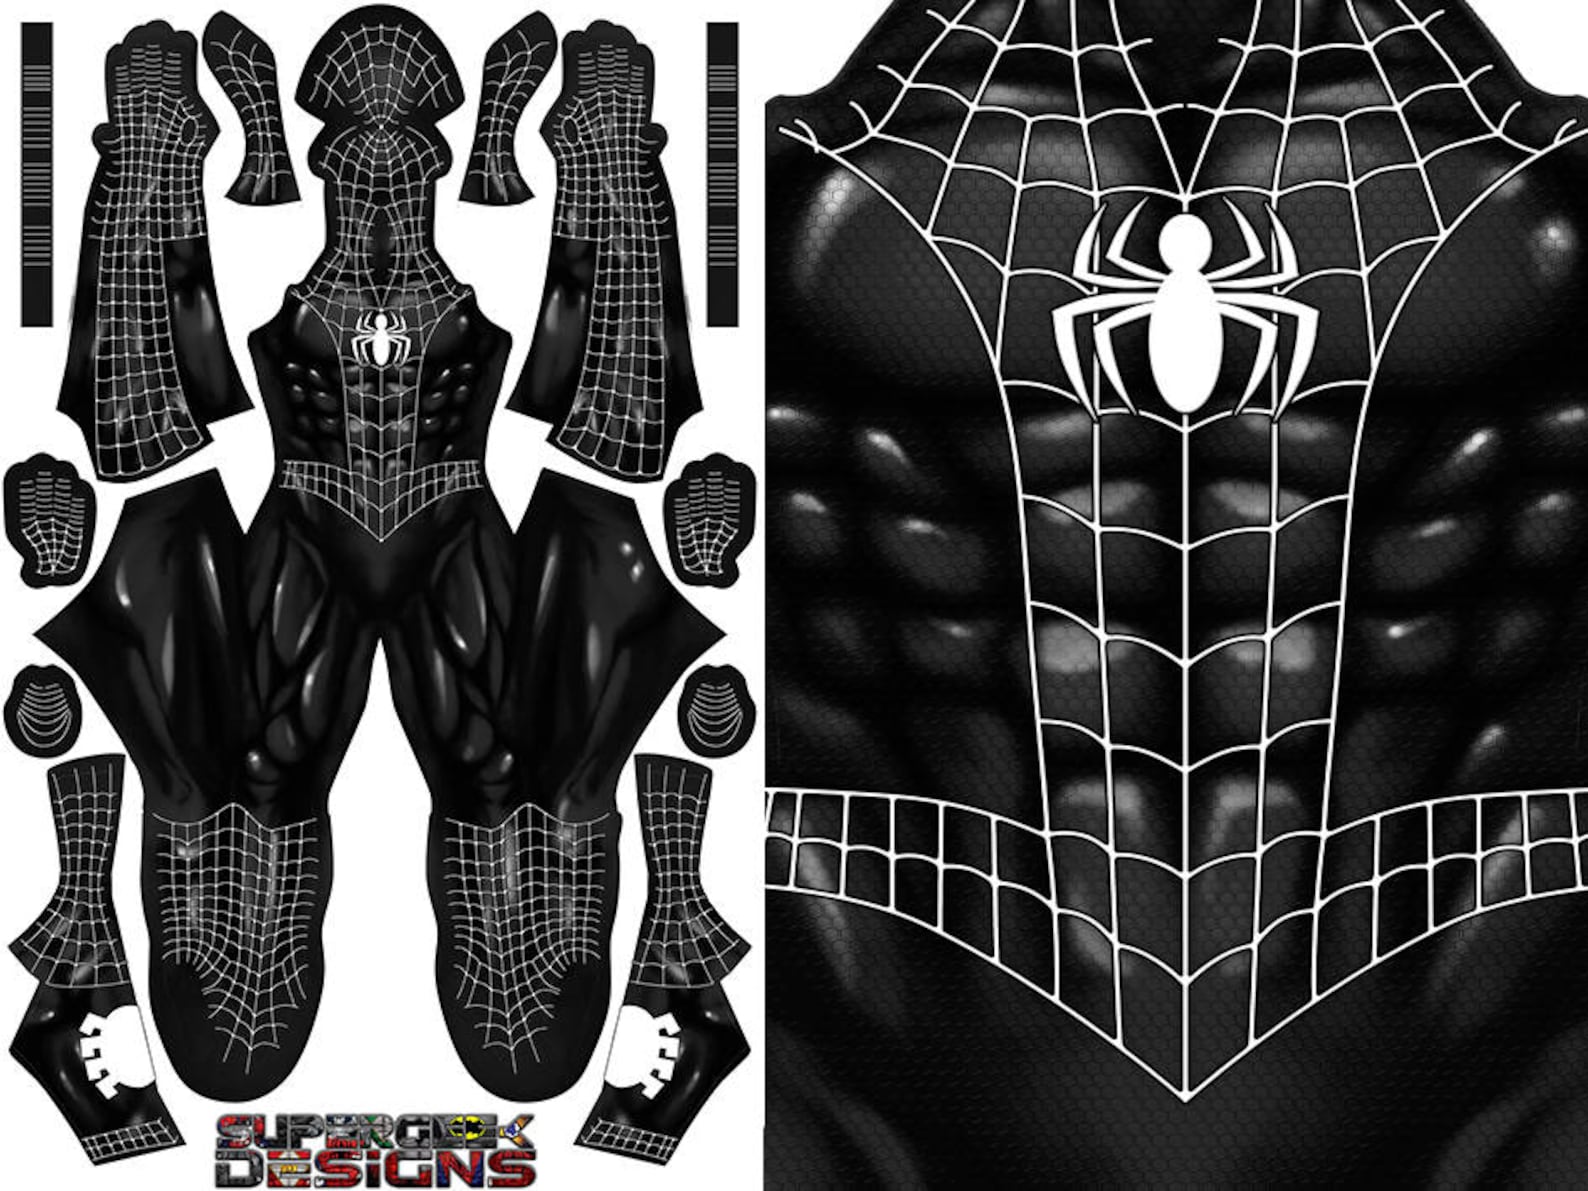 Spider man узор Sam Raimi. Развёртка маски человека паука Сэма Рейми. Раскройка костюма человека паука. Spider man Symbiote Suit Comics.